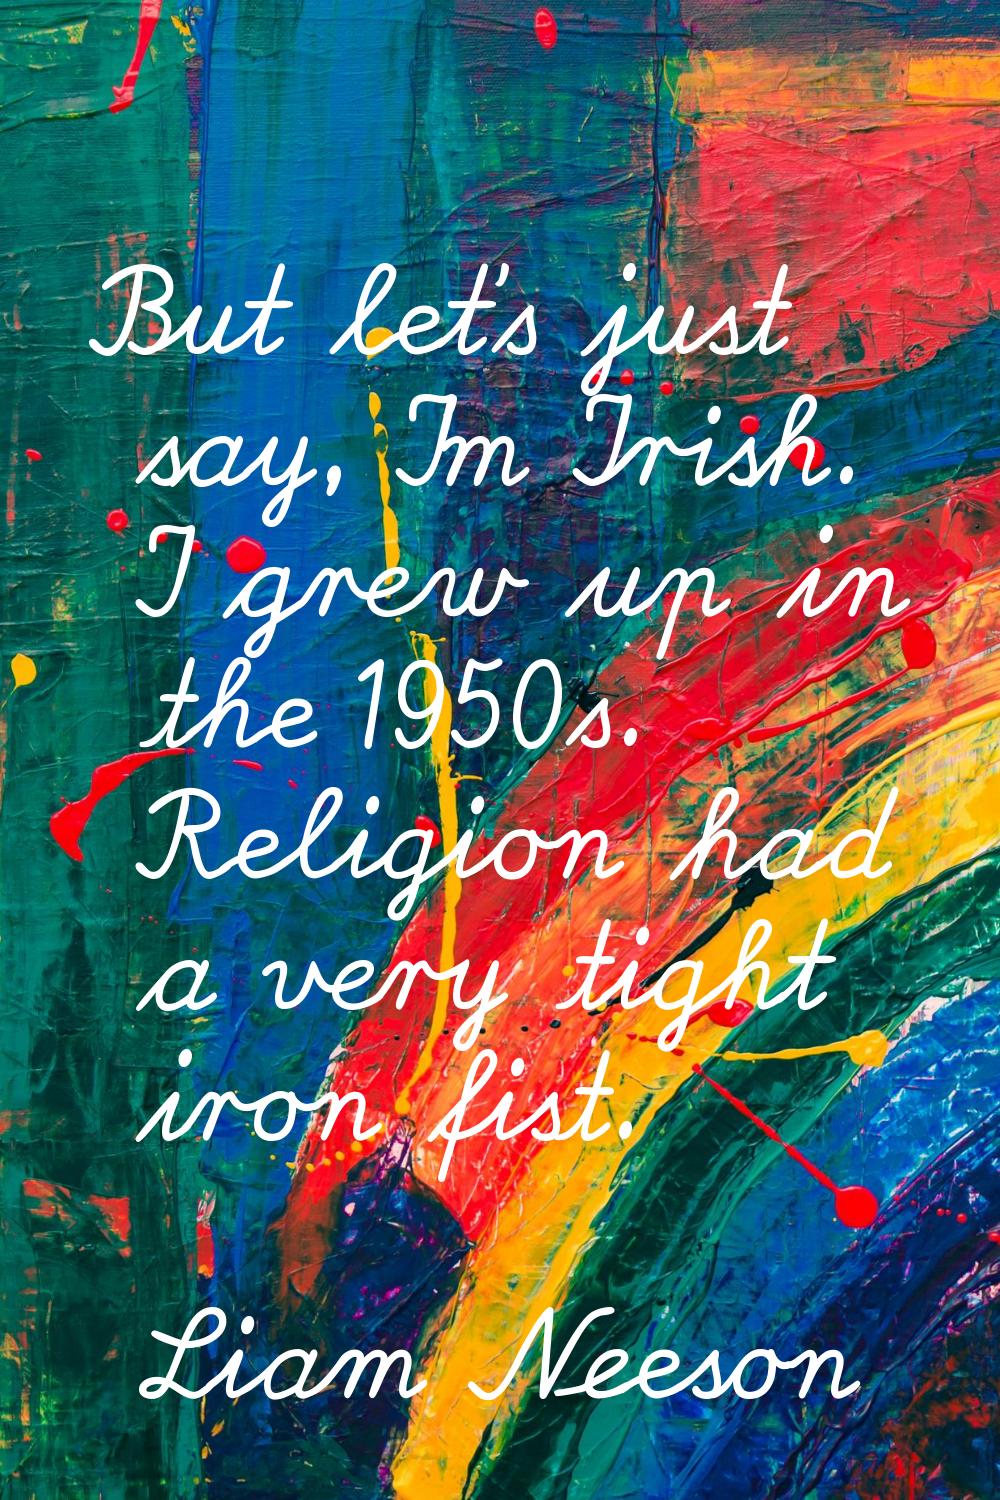 But let's just say, I'm Irish. I grew up in the 1950s. Religion had a very tight iron fist.